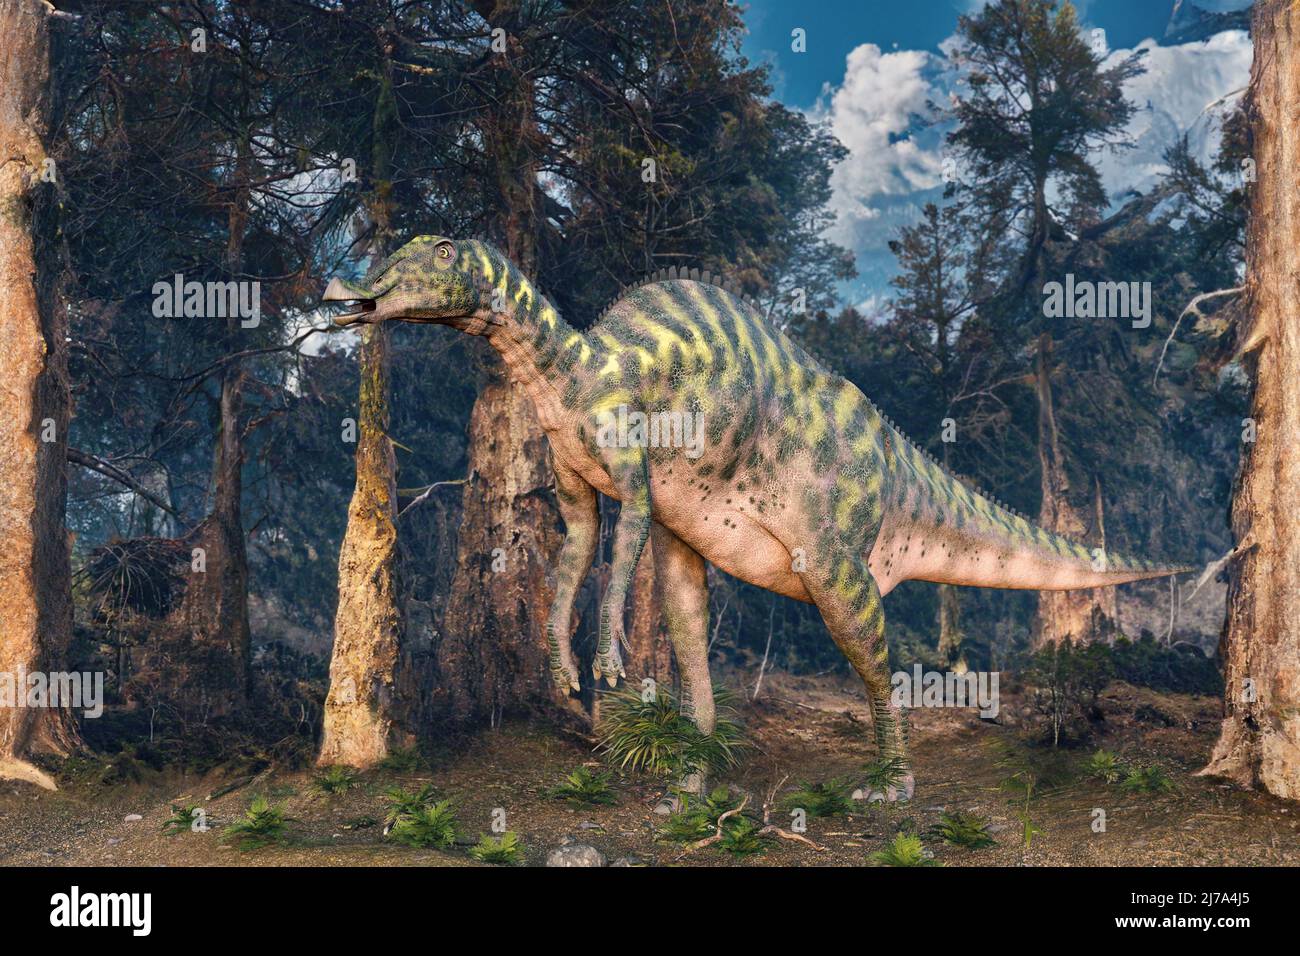 Shantungosaurus dinosaur, illustration Stock Photo